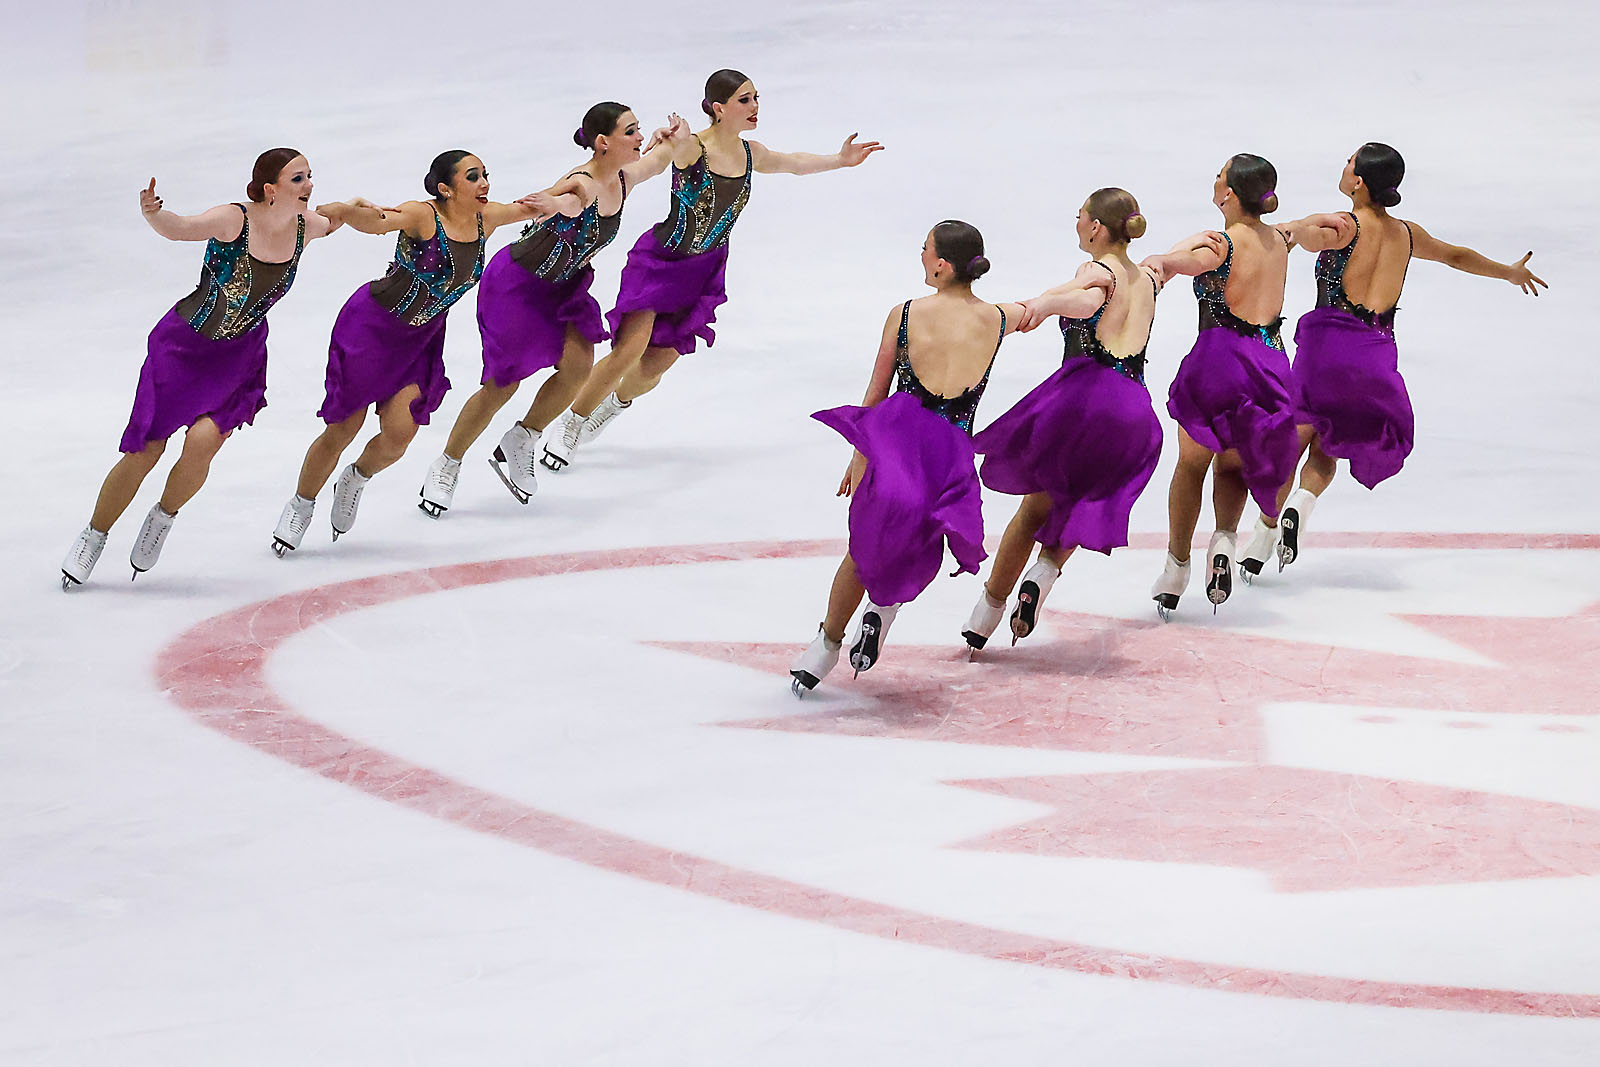 figure skating canadian national championships sports photographer sergei belski photo